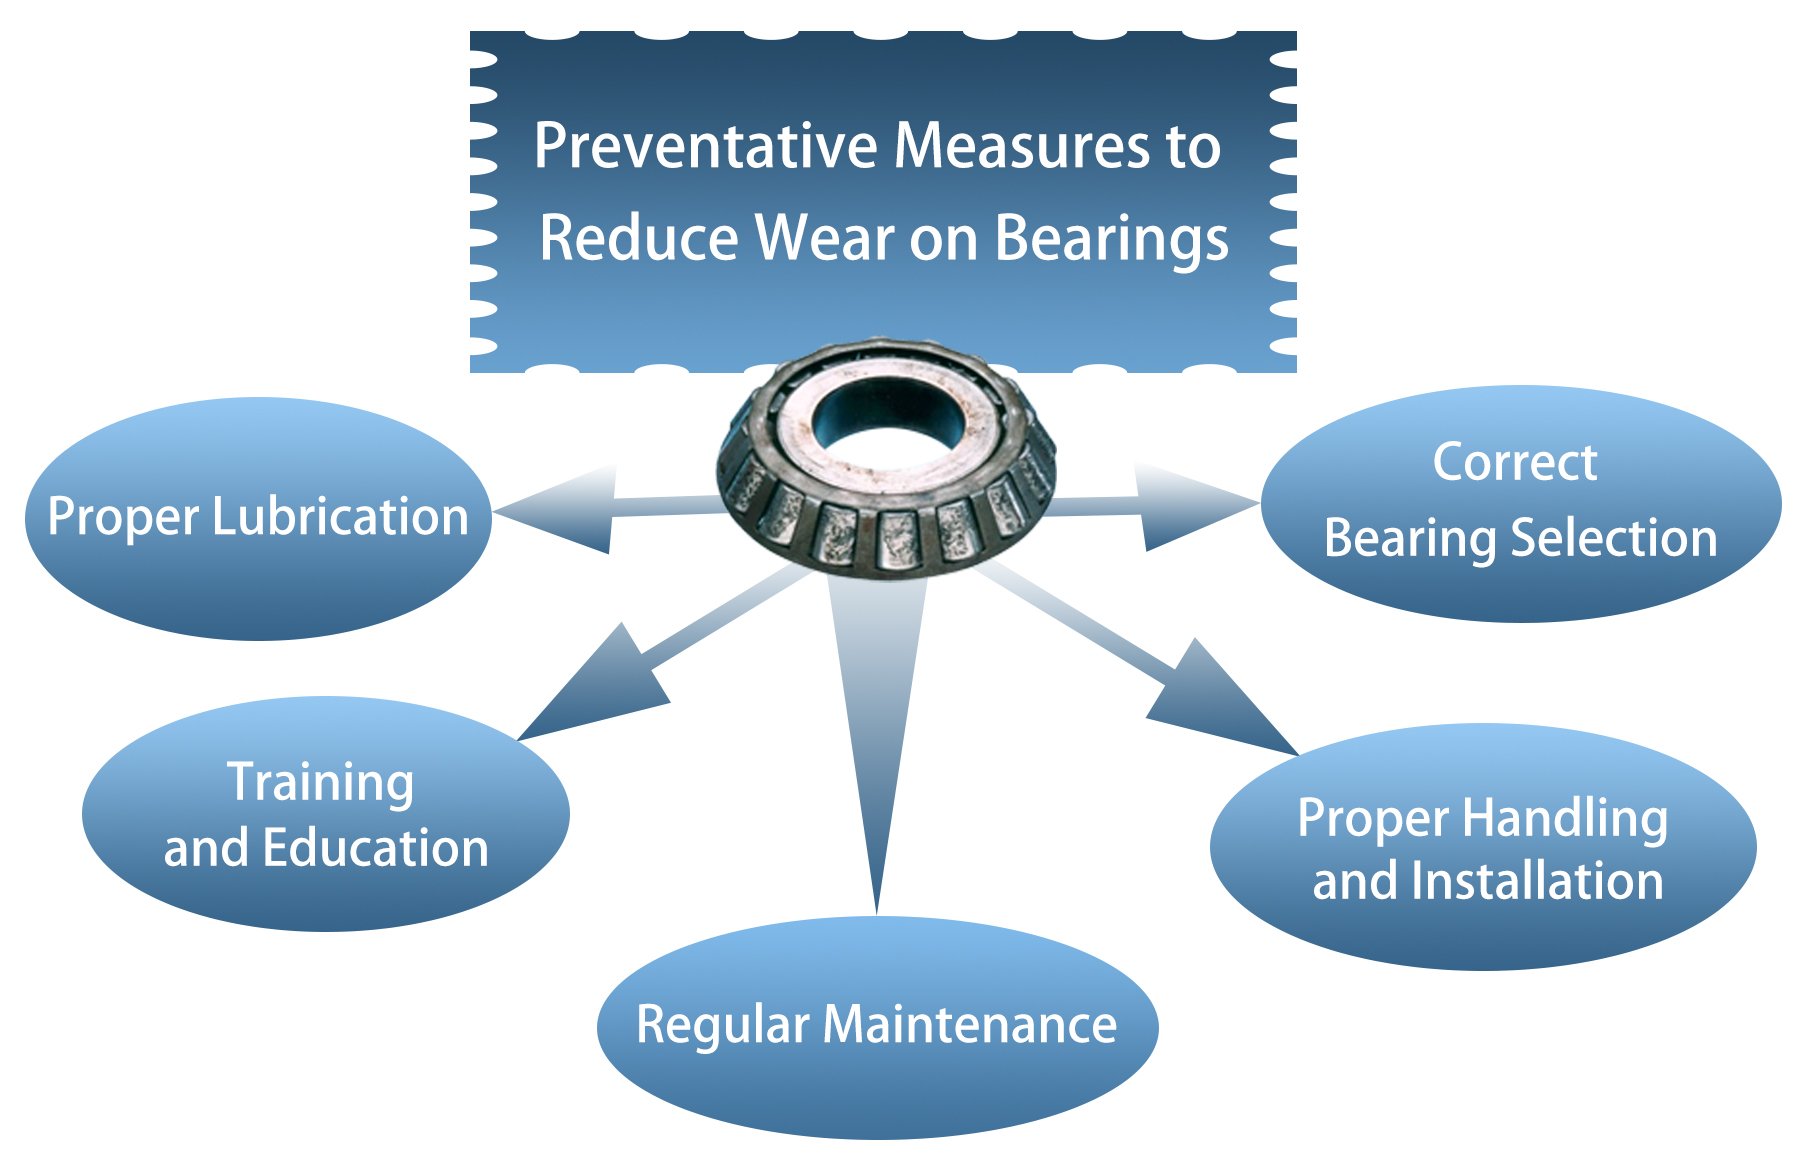 Preventative Measures for bearing failures